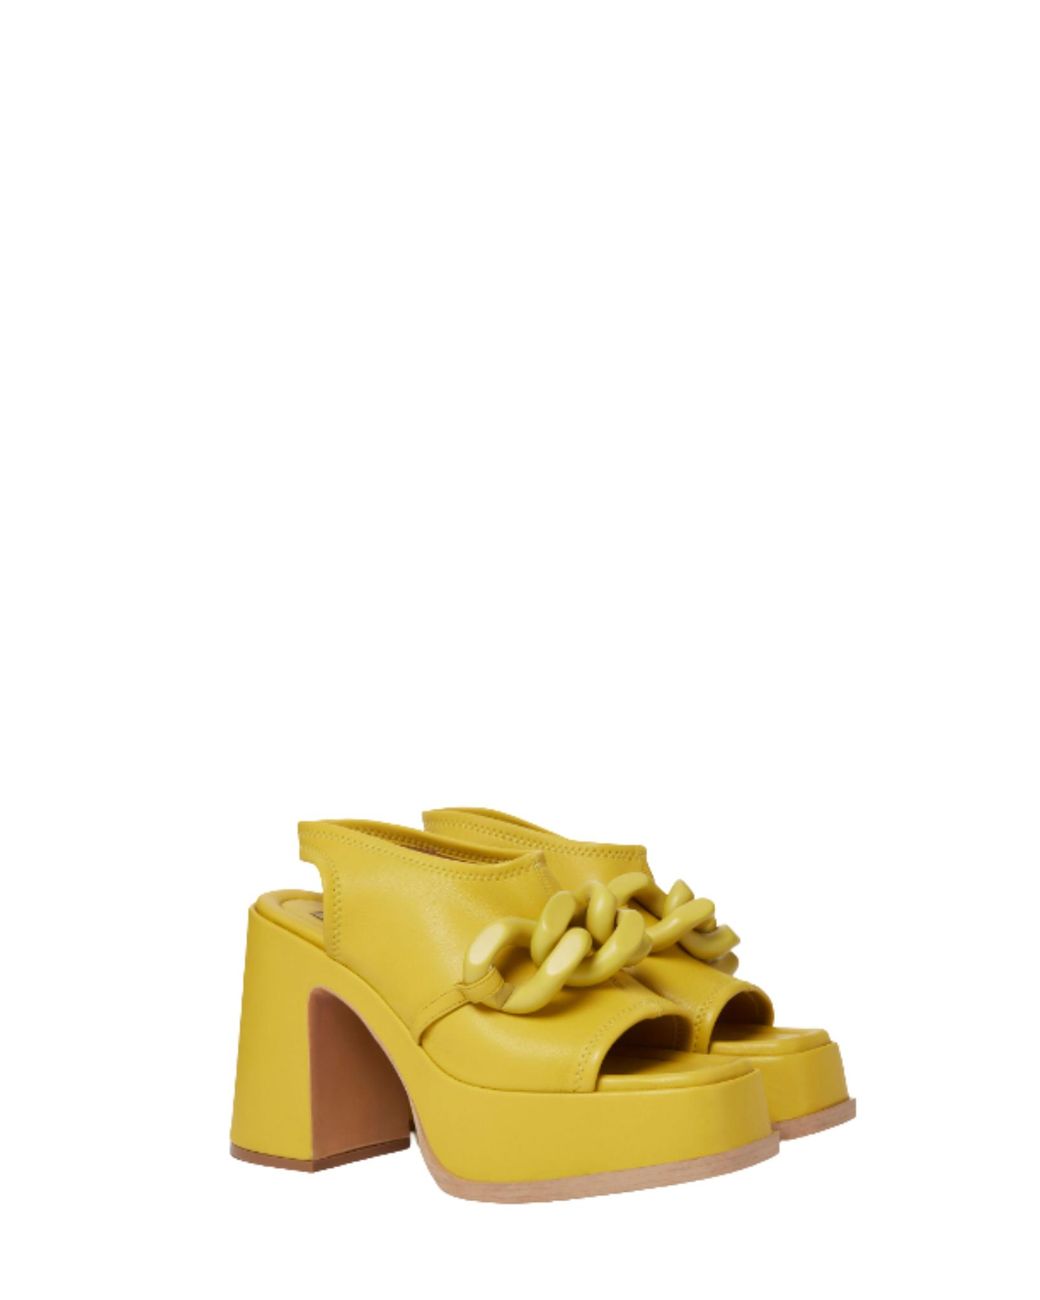 Stella McCartney Skyla Chain Platform Sandals in Yellow | Lyst